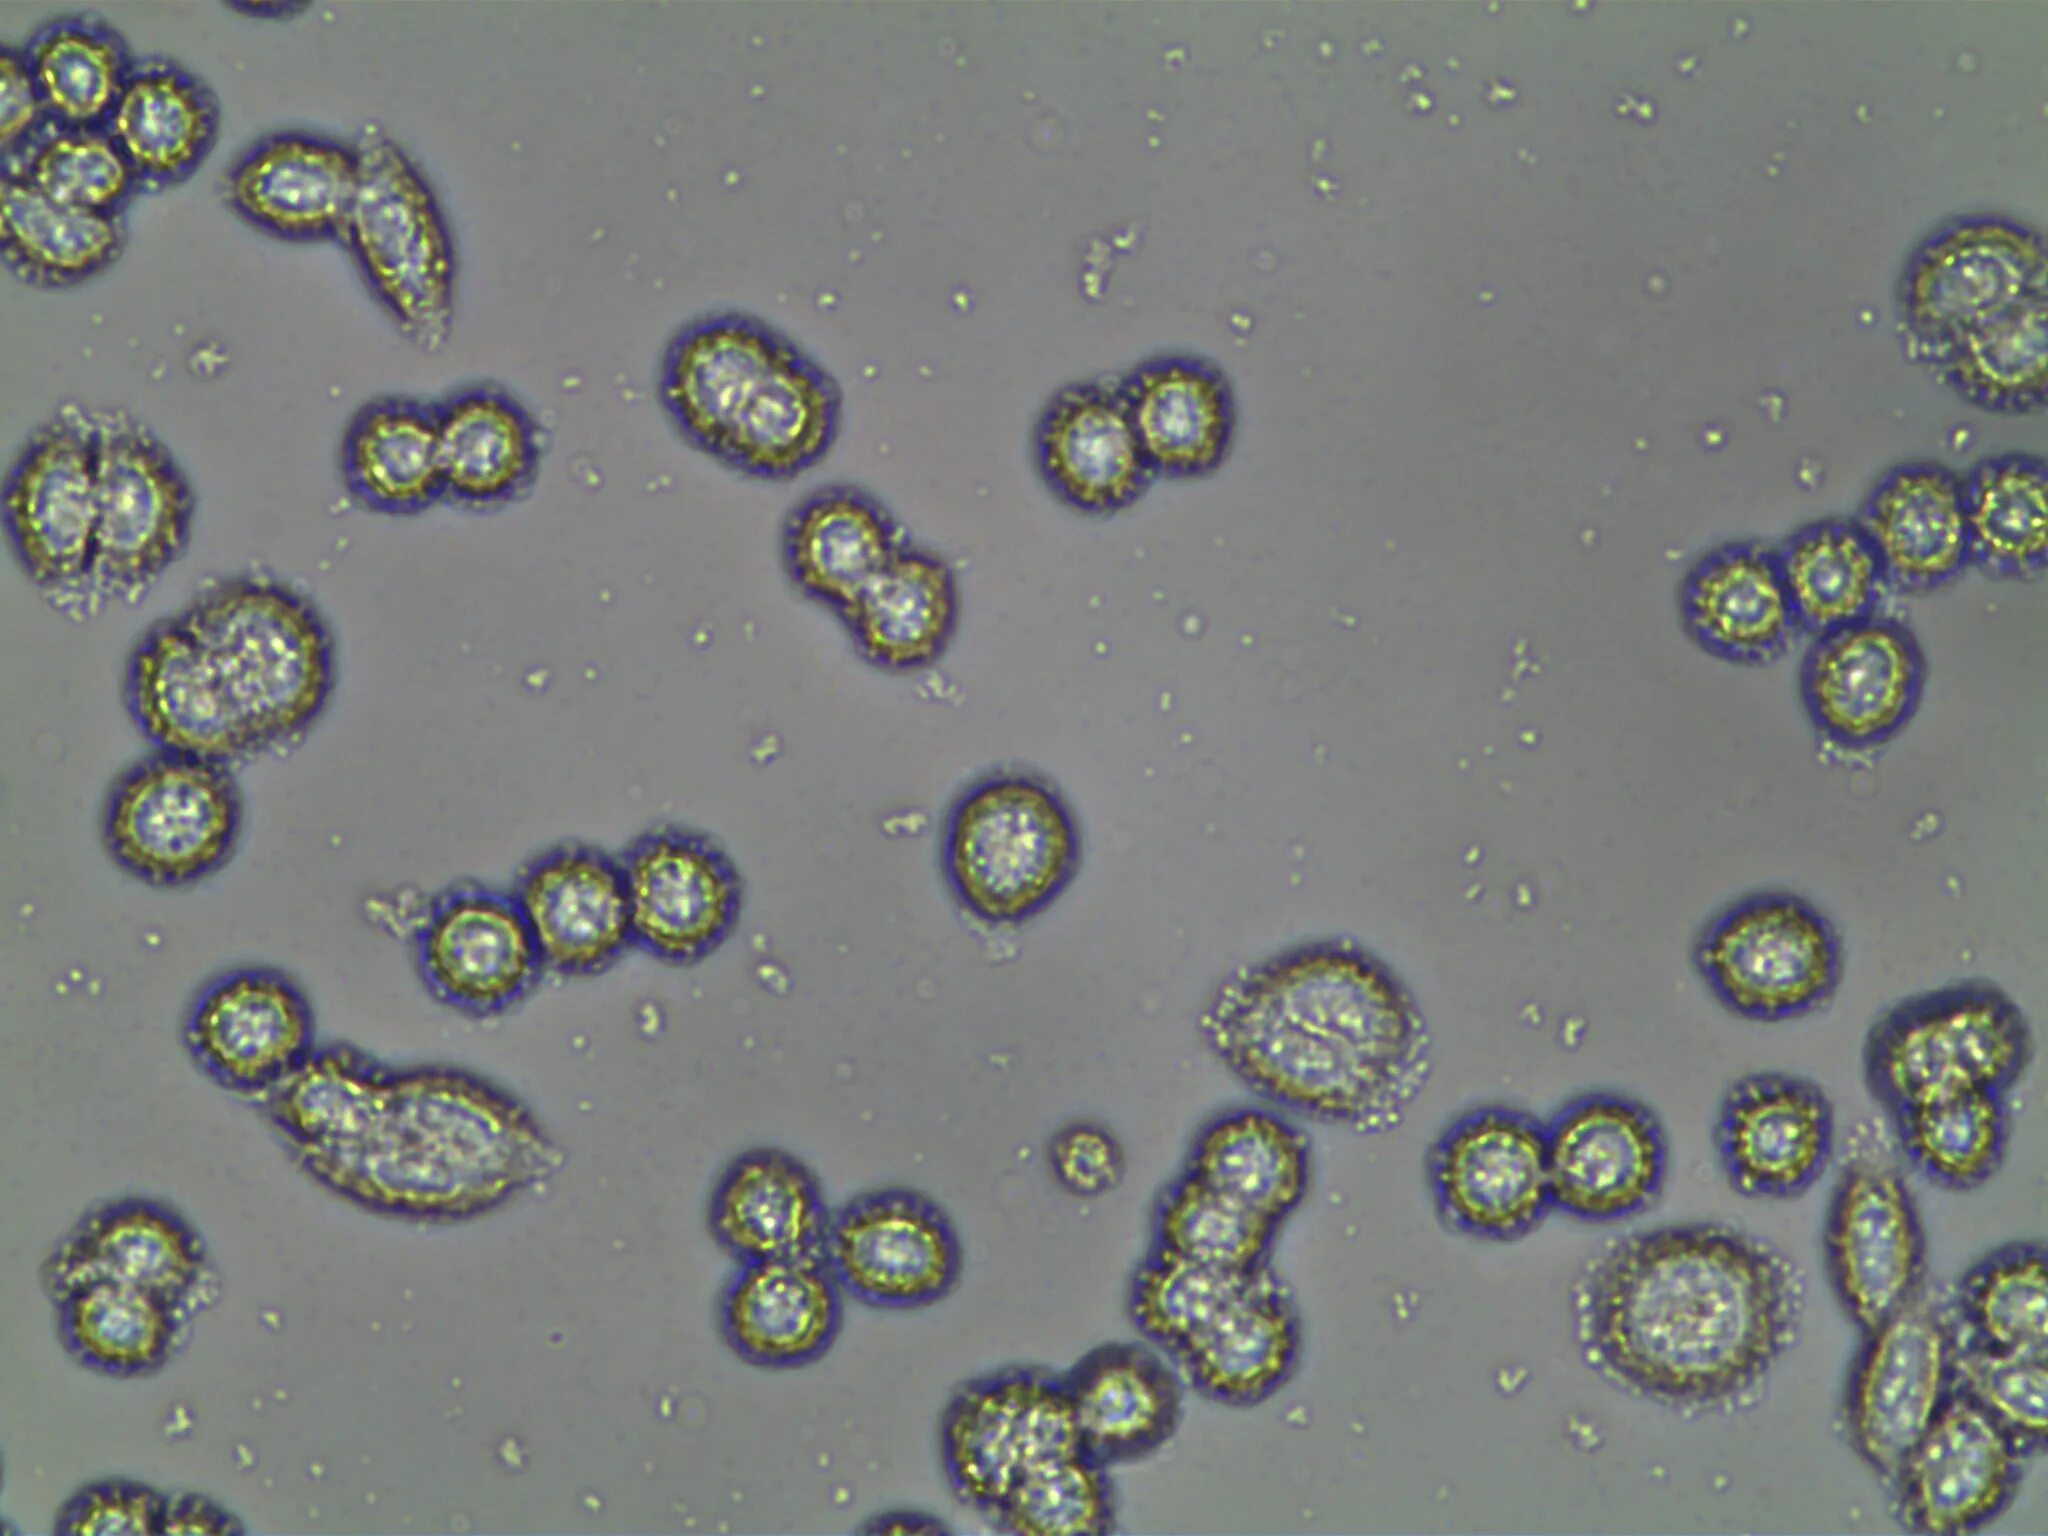 Дрожжи живые организмы. Дрожжи Saccharomyces cerevisiae. Дрожжей Saccharomyces cerevisiae микроскопия. Дрожжи Saccharomyces микроскопия. Пекарские дрожжи Saccharomyces cerevisiae.